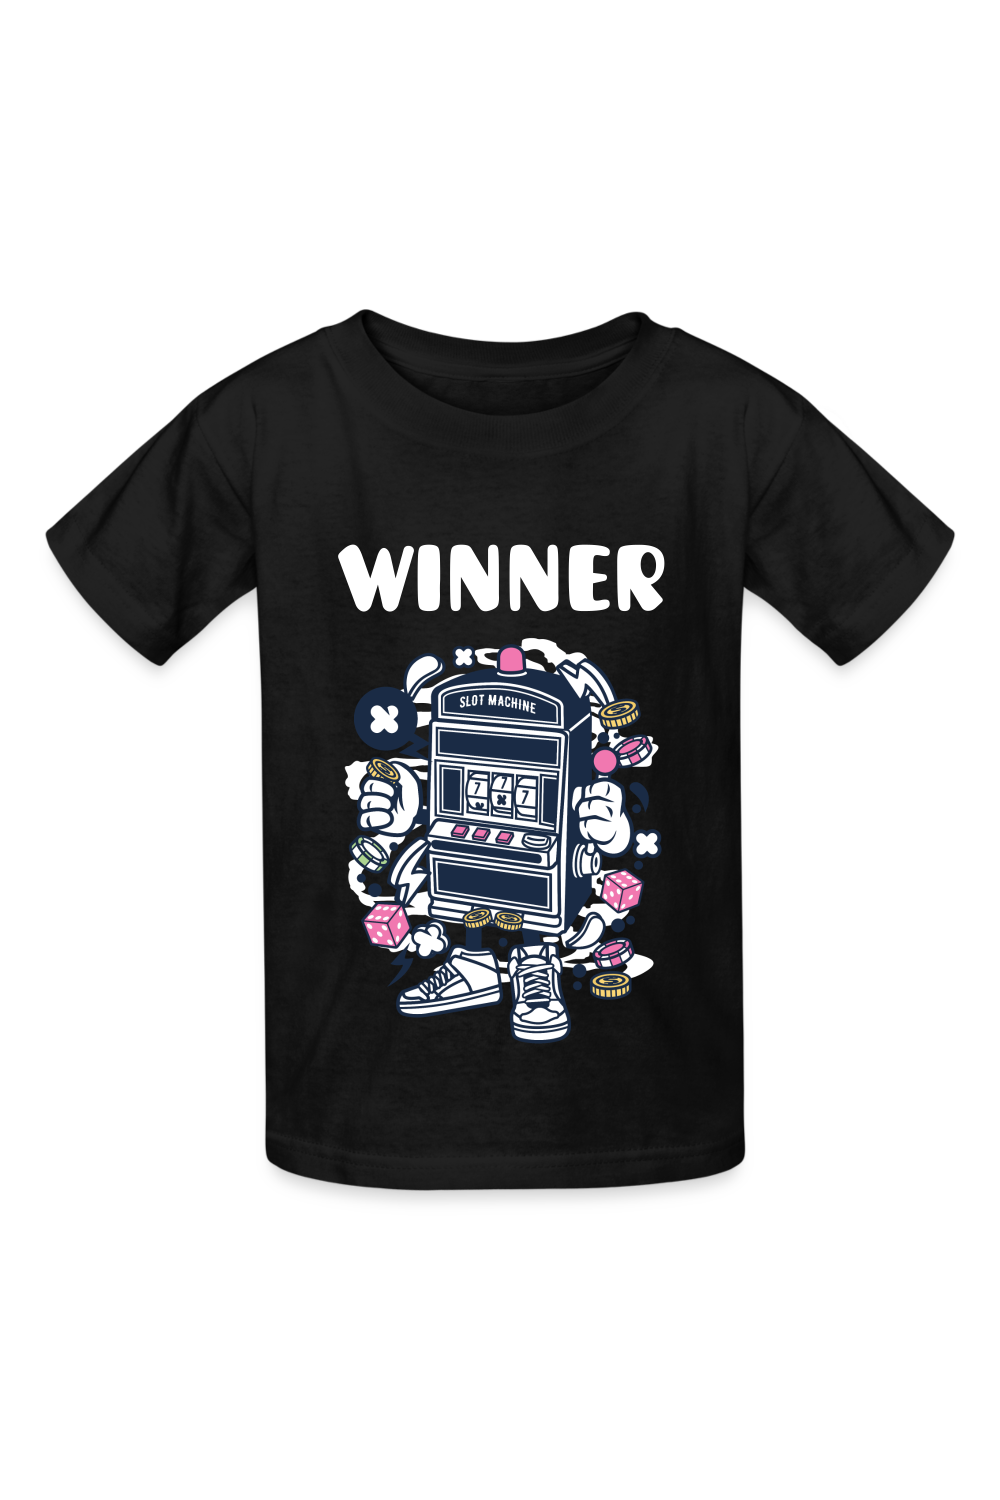 Boys Winner Slot Machine Short Sleeve T-Shirt - black - NicholesGifts.online